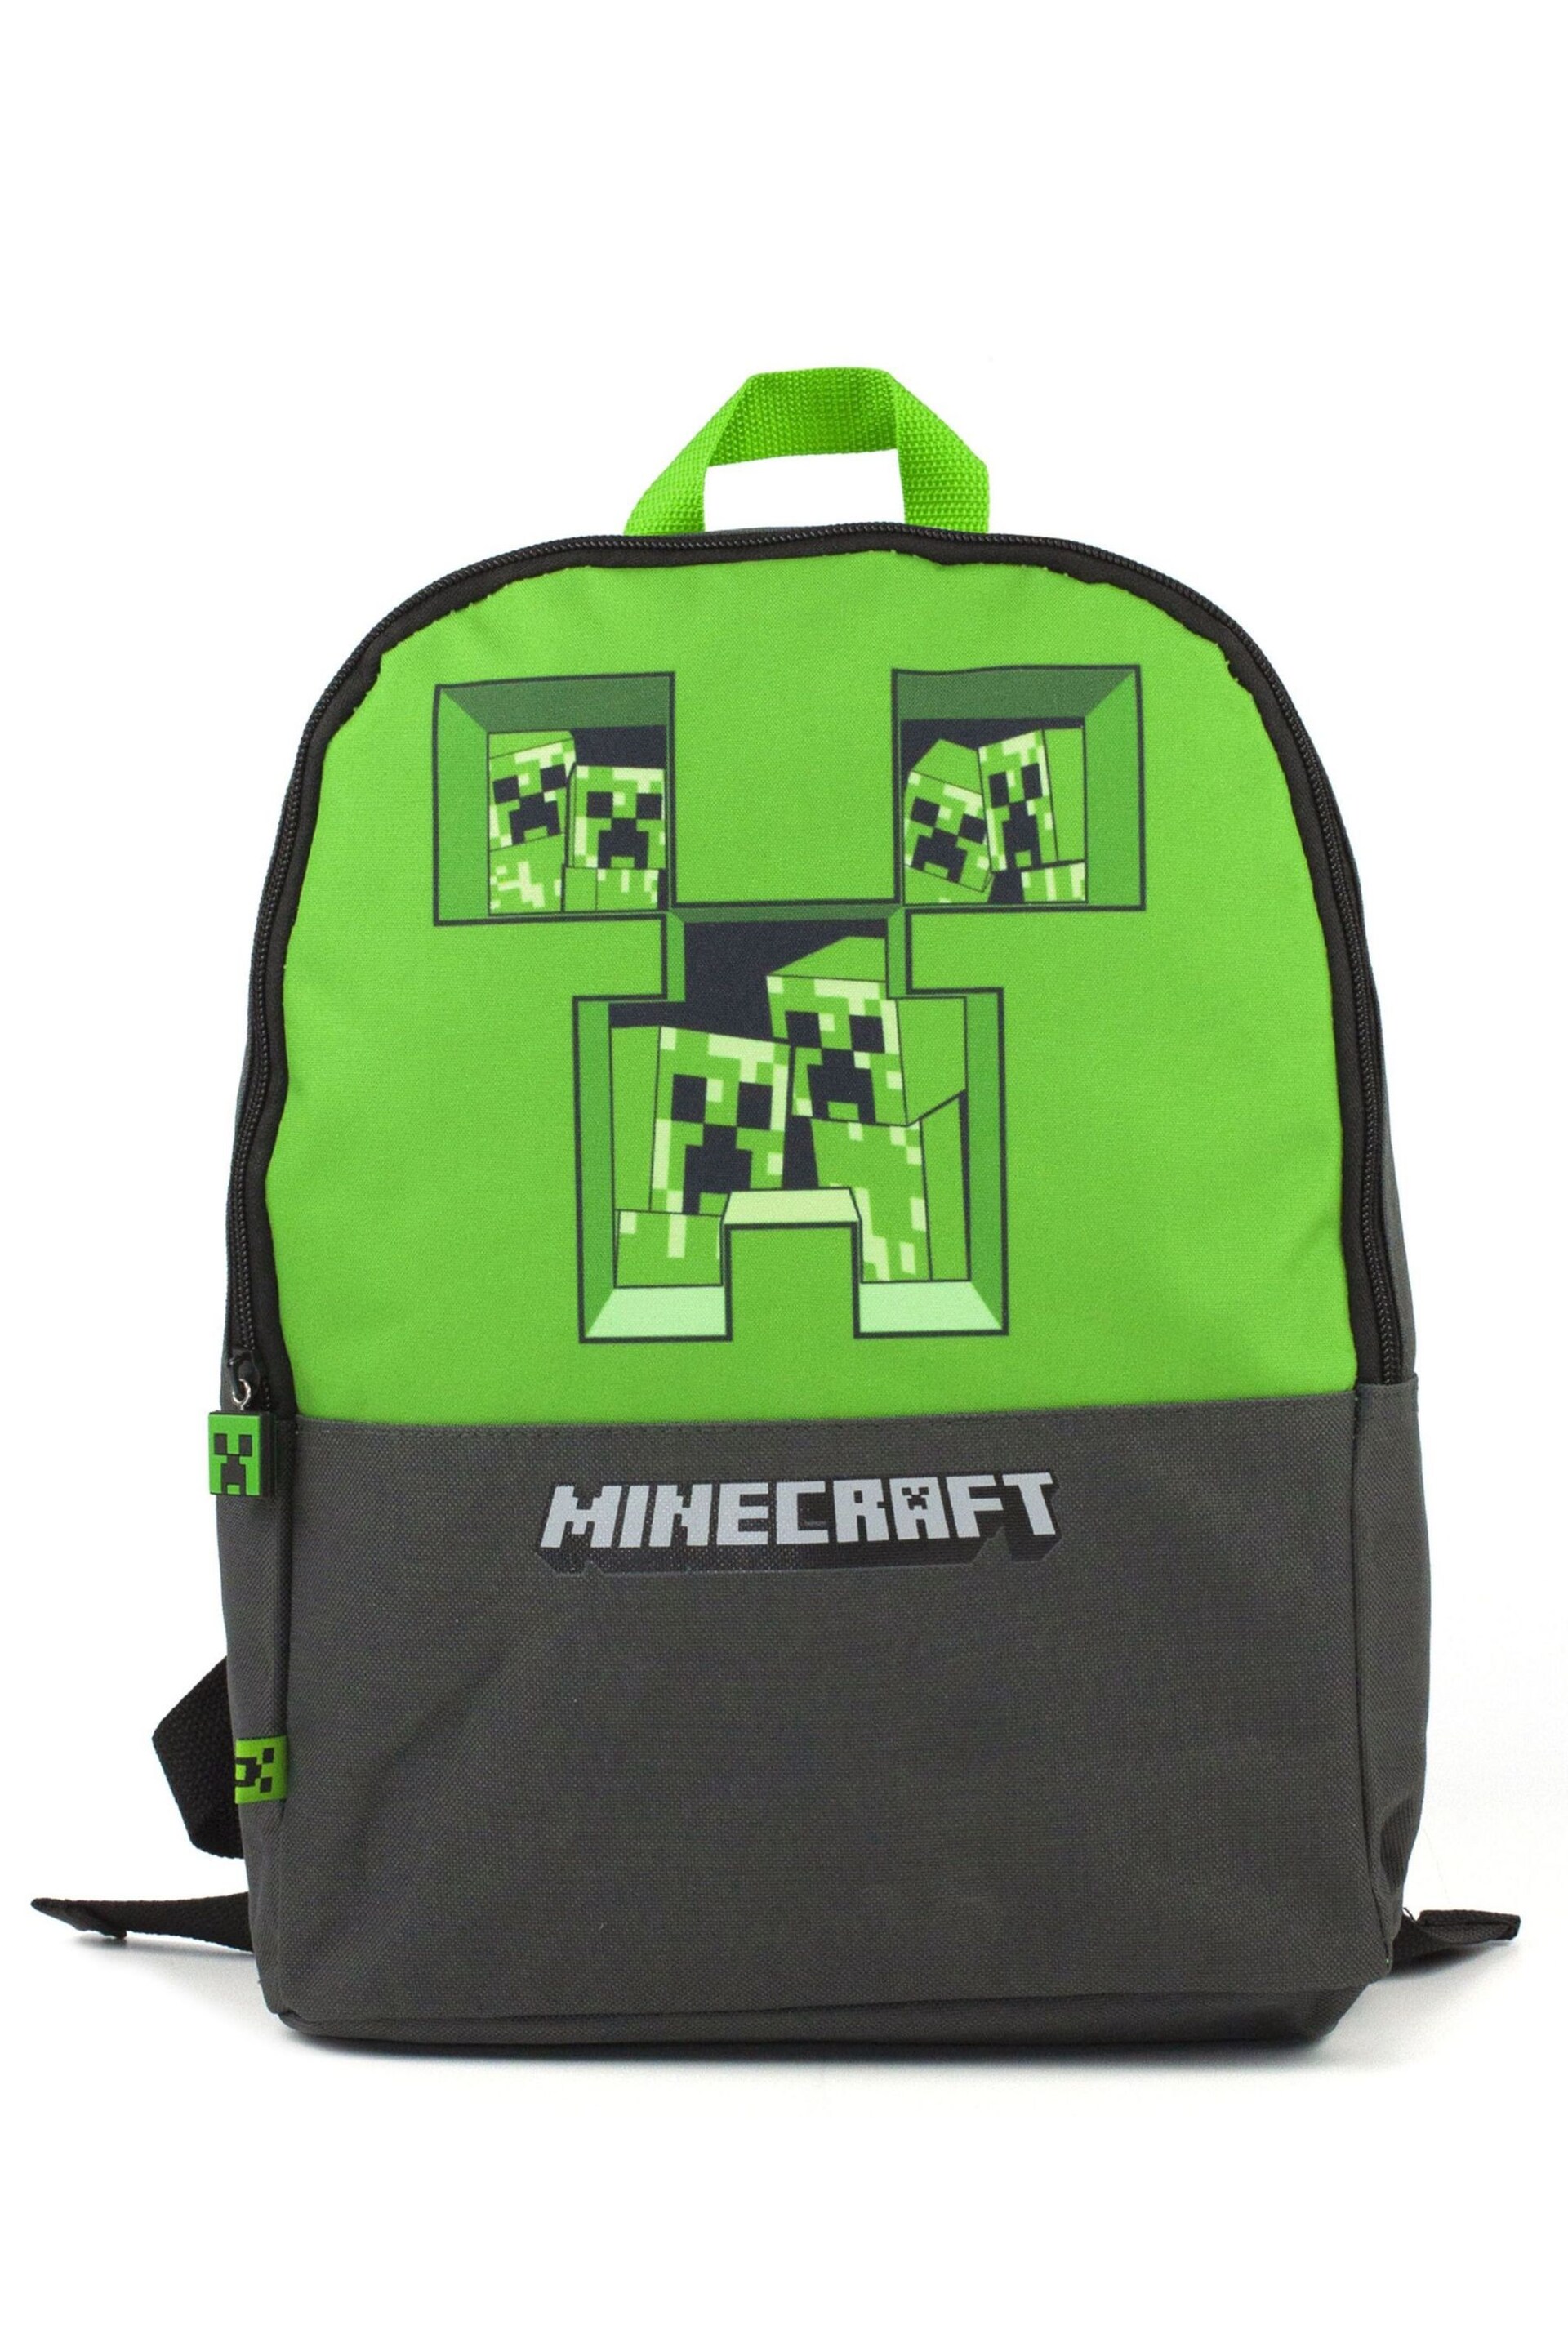 Vanilla Underground Green Minecraft Backpack - Image 1 of 4